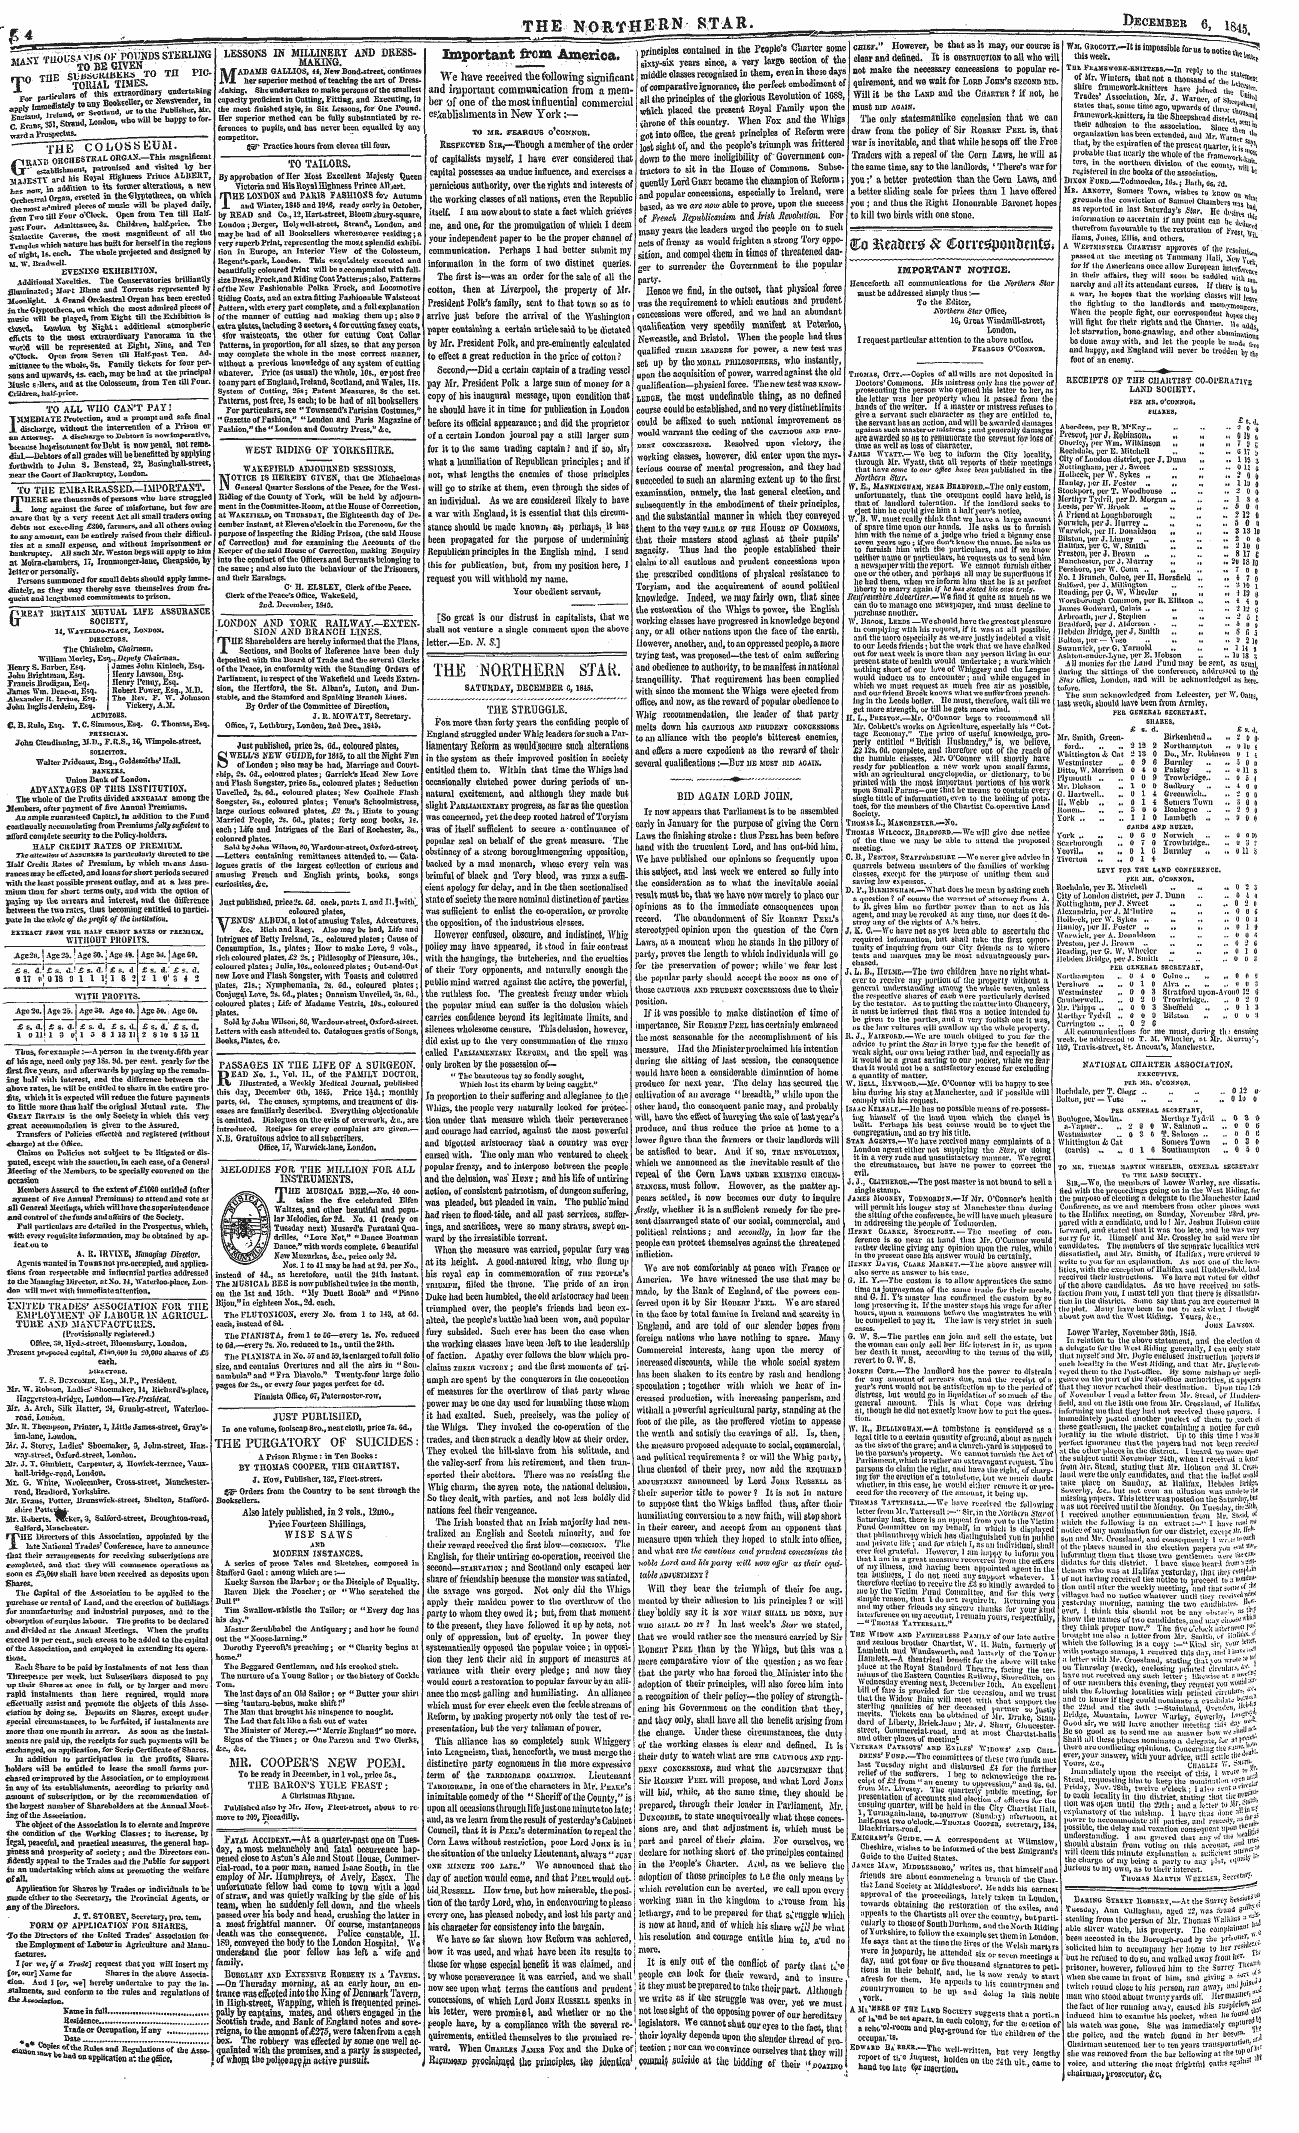 Northern Star (1837-1852): jS F Y, 3rd edition - Ad00424